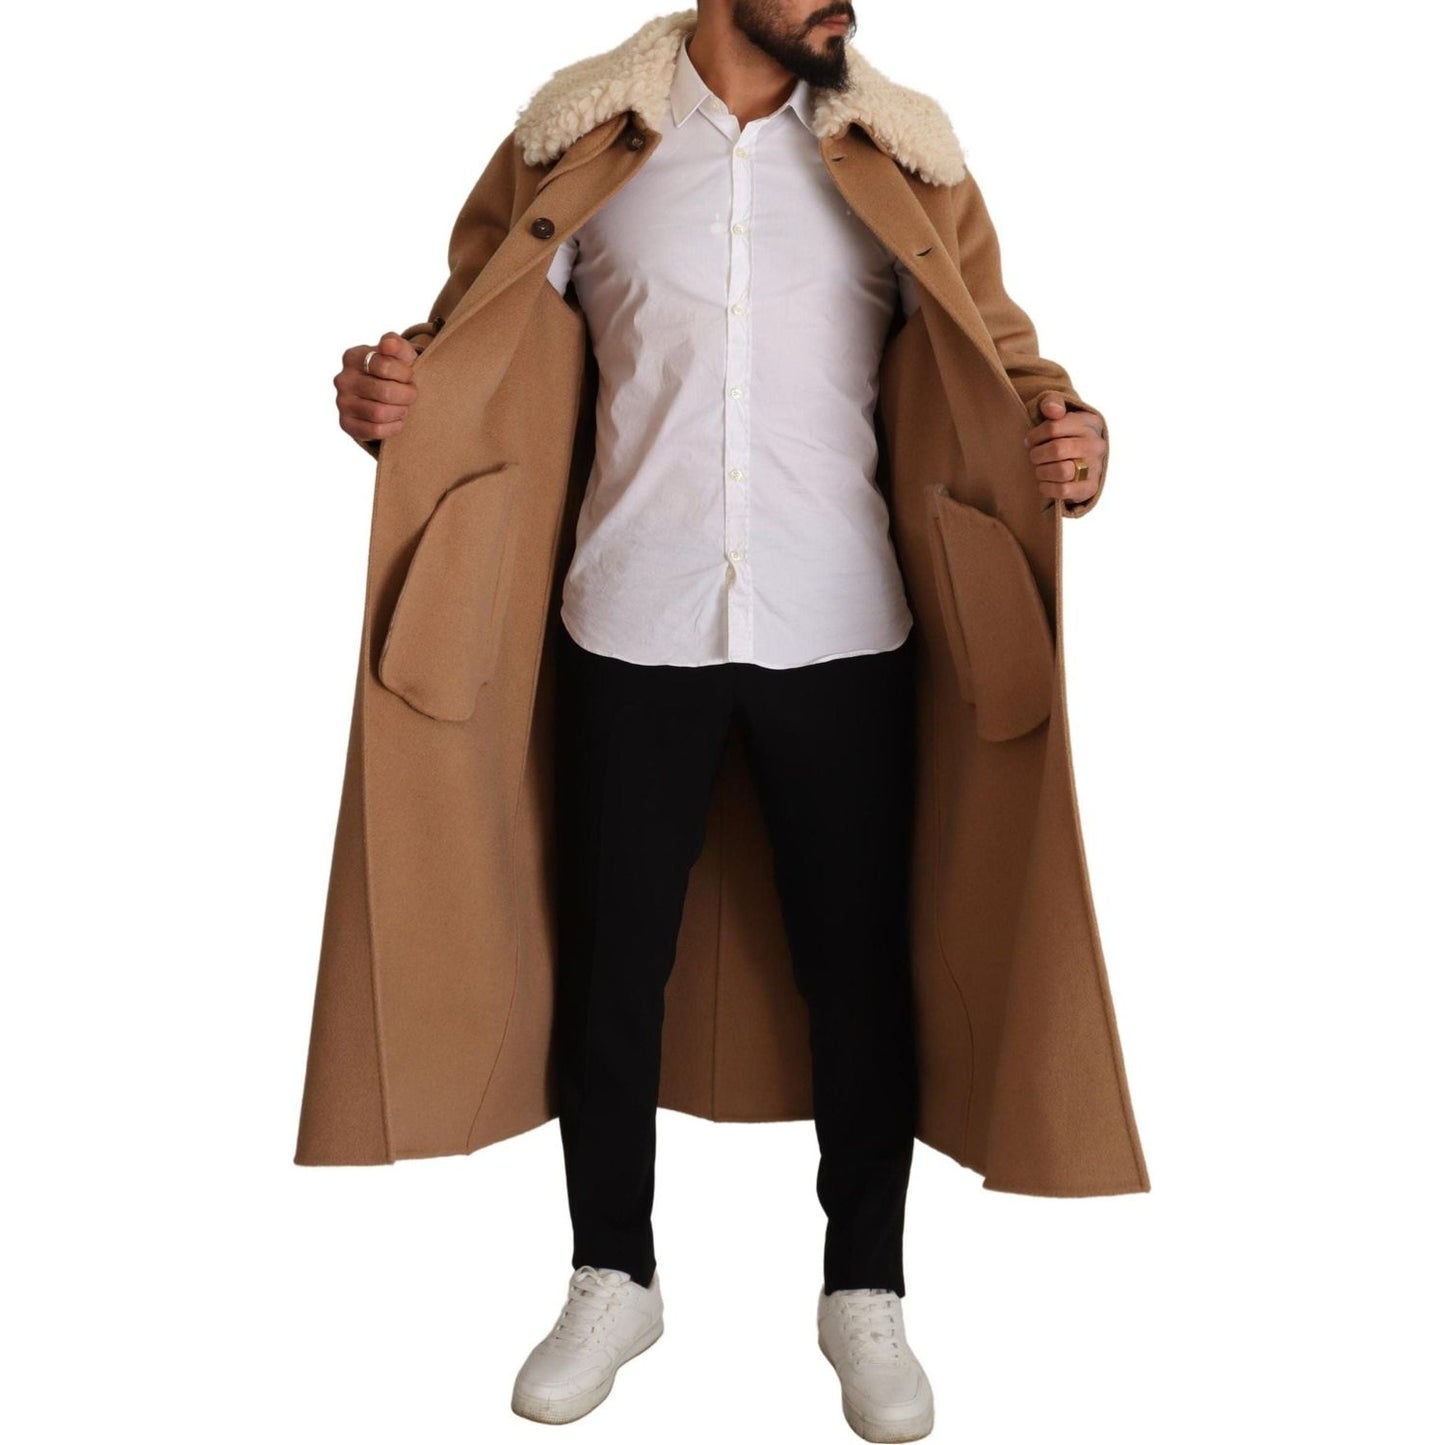 Dolce & Gabbana Opulent Beige Shearling-Collar Overcoat beige-camel-skin-cashmere-shearling-overcoat-jacket IMG_5030-scaled-22785234-ce9.jpg